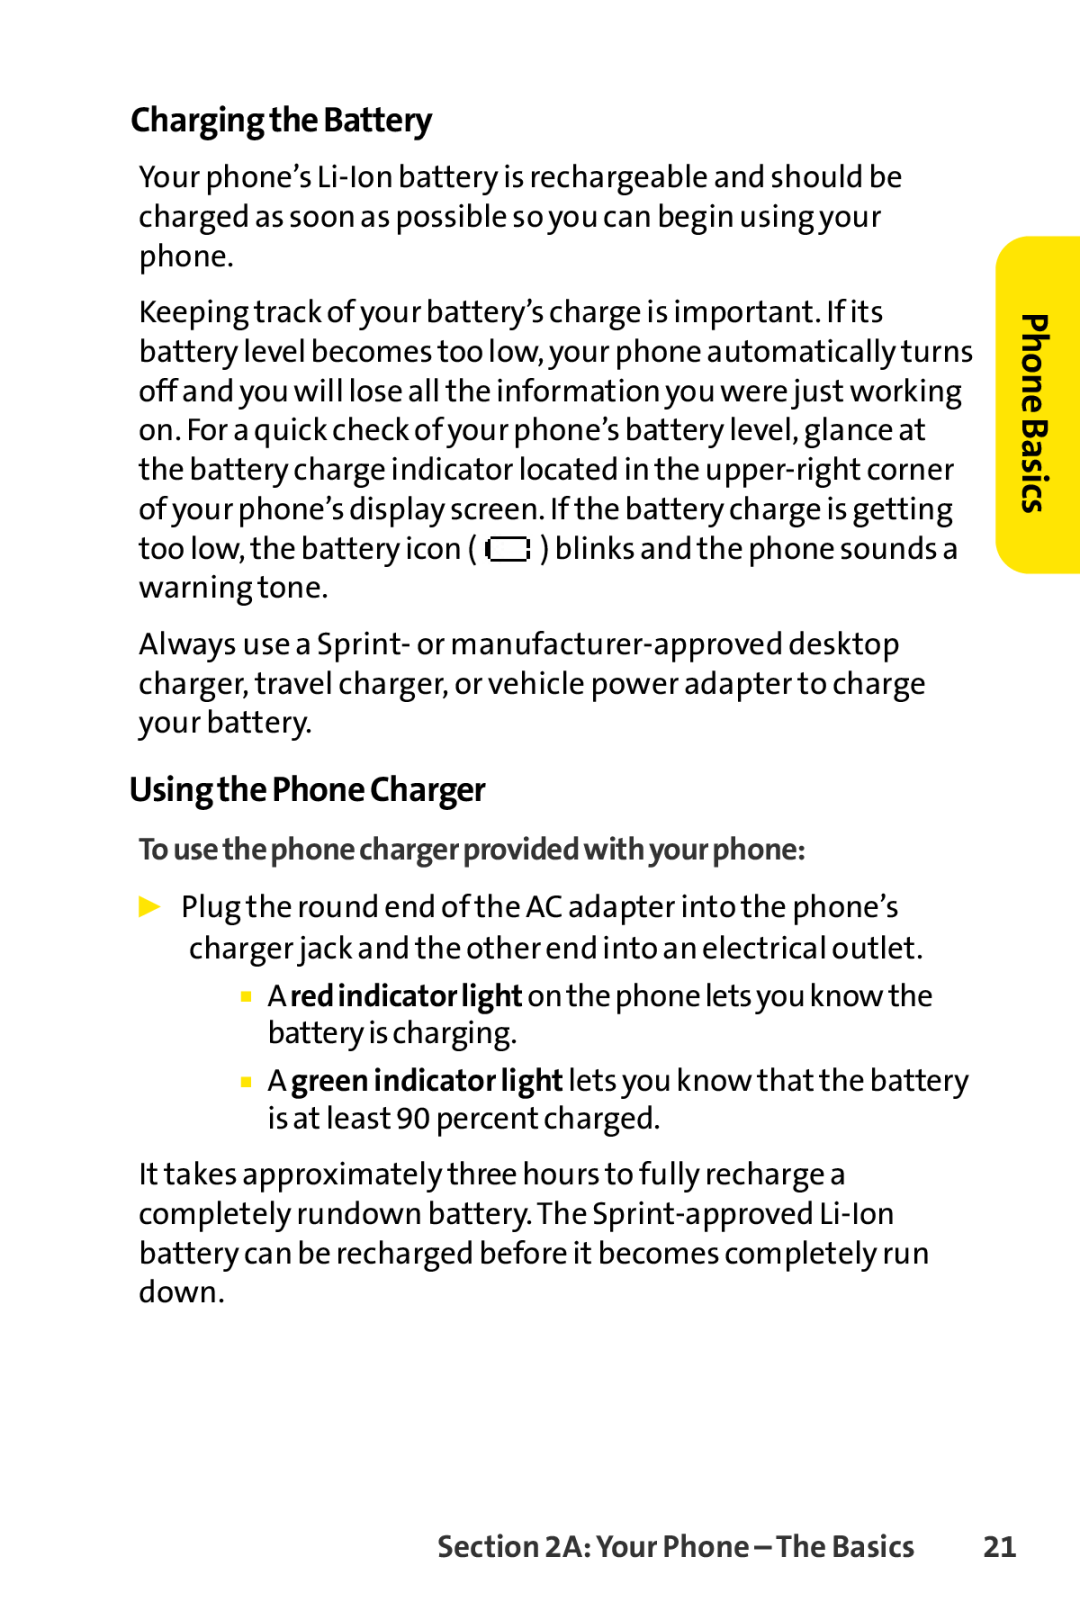 Sprint Nextel LX160 ChargingtheBattery, UsingthePhoneCharger, Tousethephonechargerprovidedwithyourphone, Phone Basics 